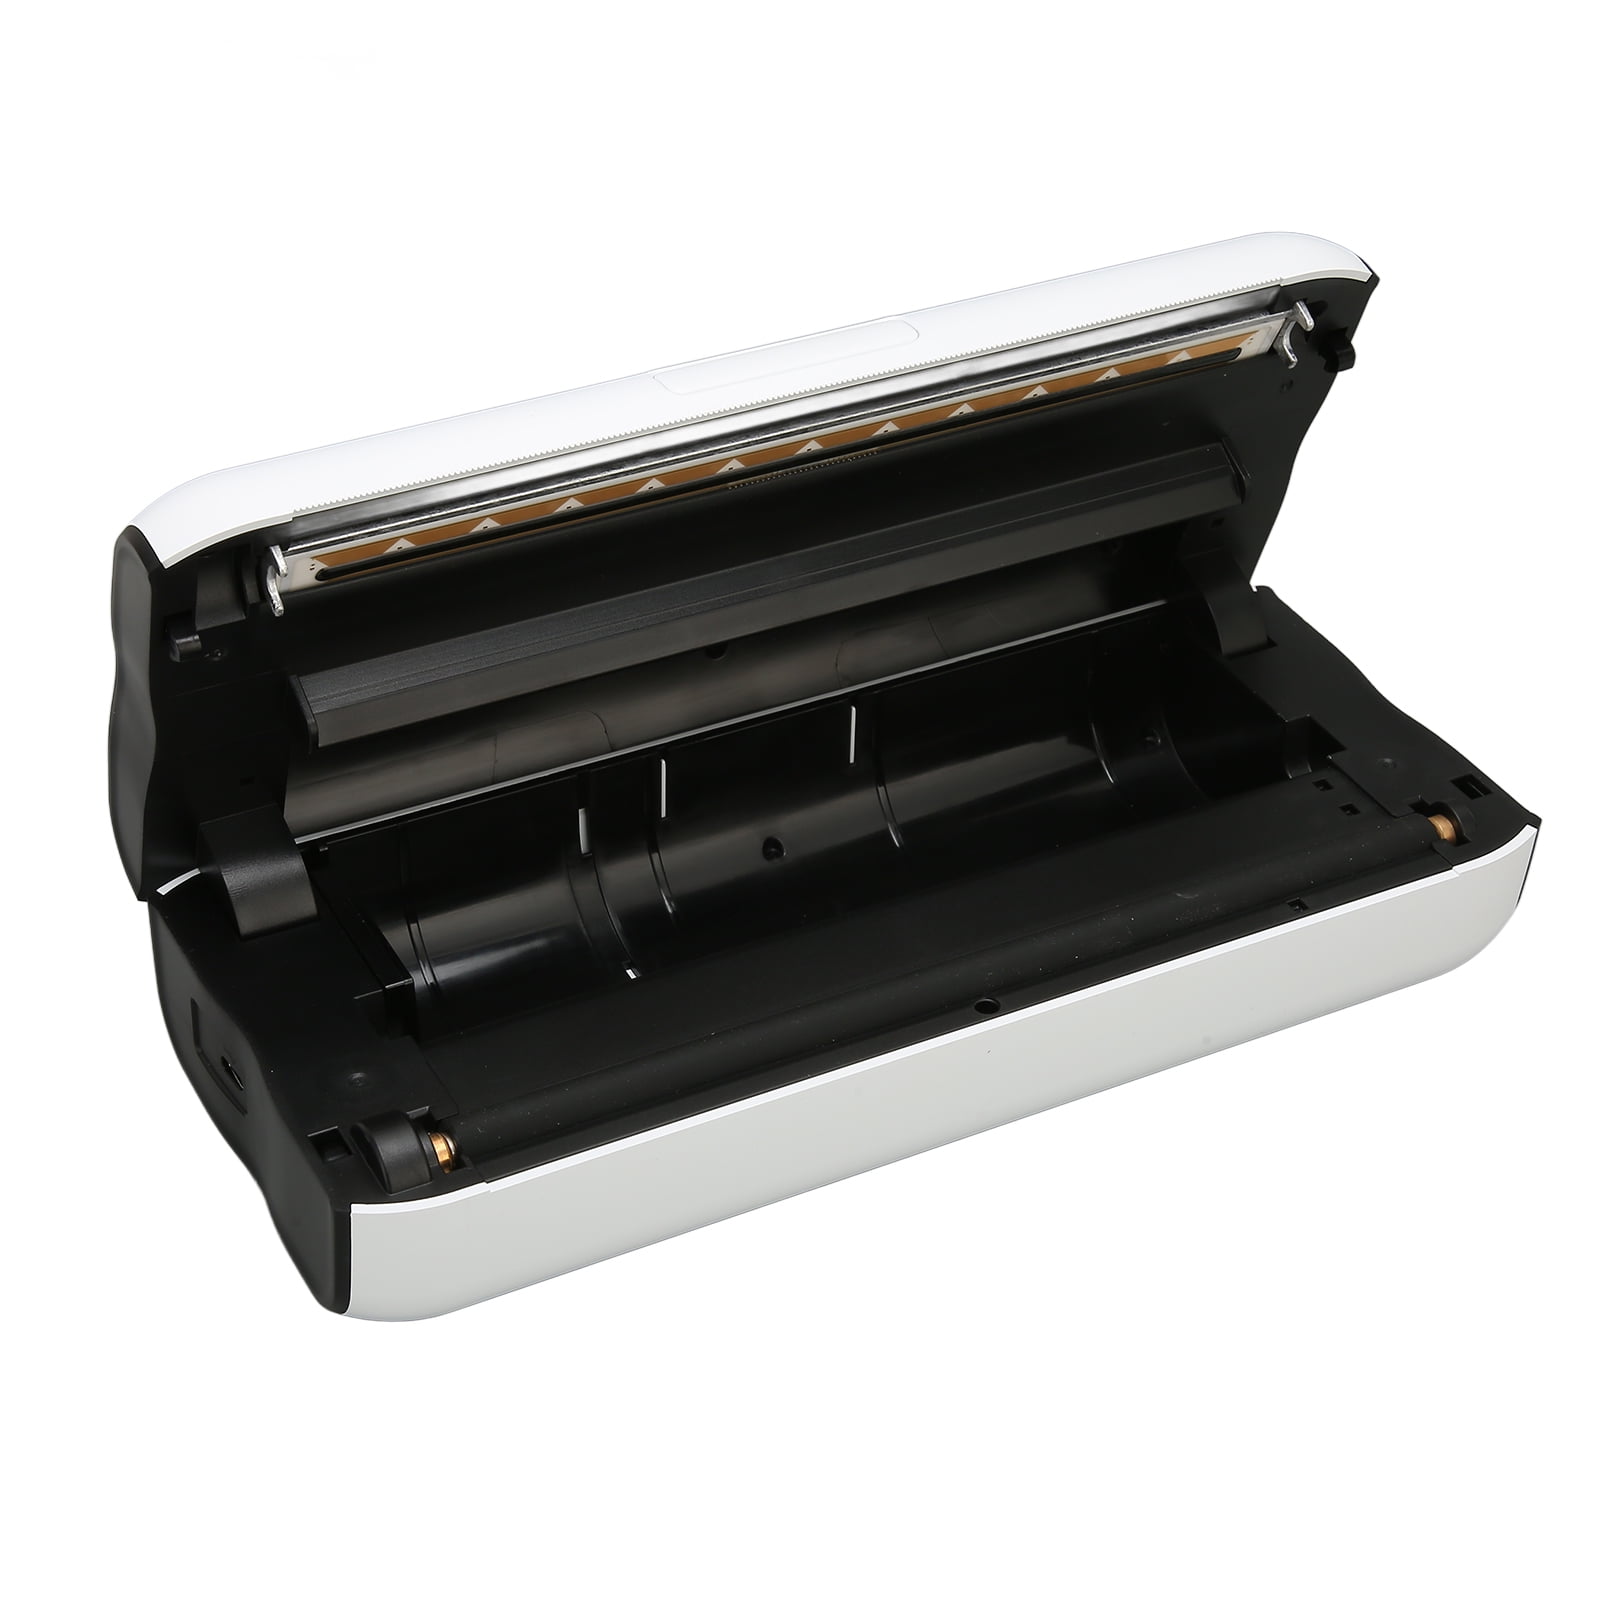  Garosa A4 Thermal Printer 200dpi Mini Portable Printer